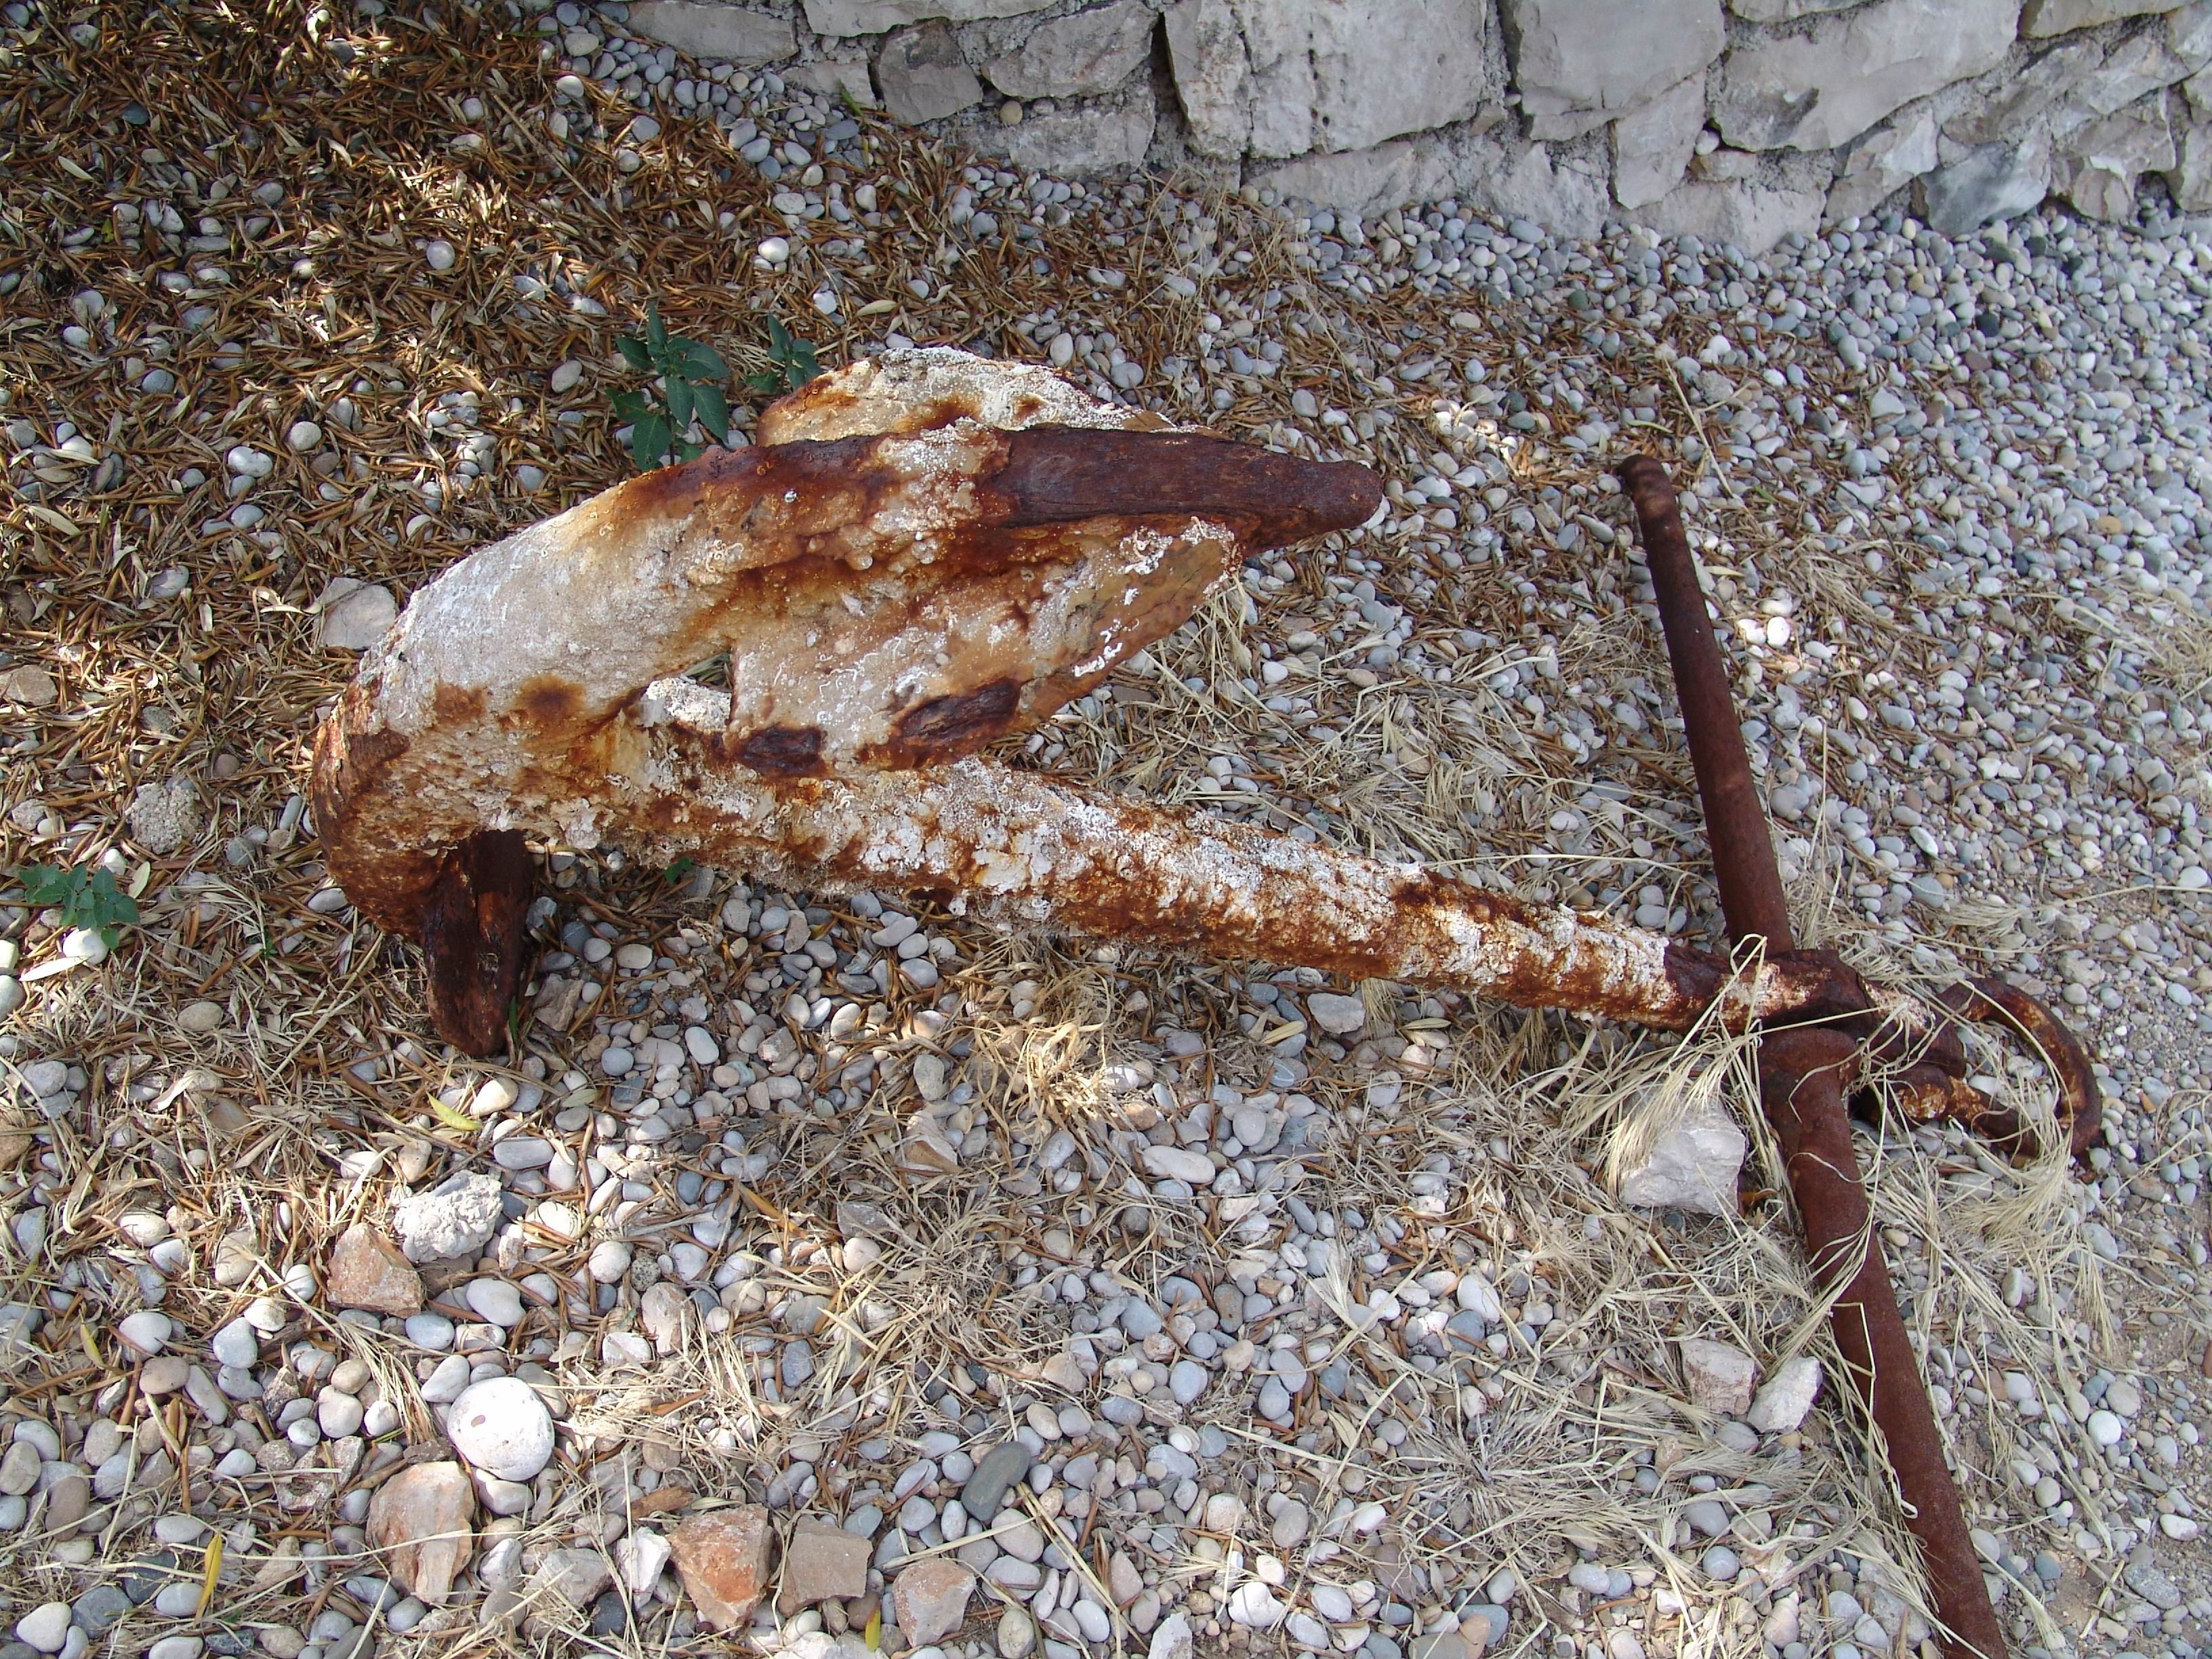 File:Rusty anchor.jpg - Wikimedia Commons